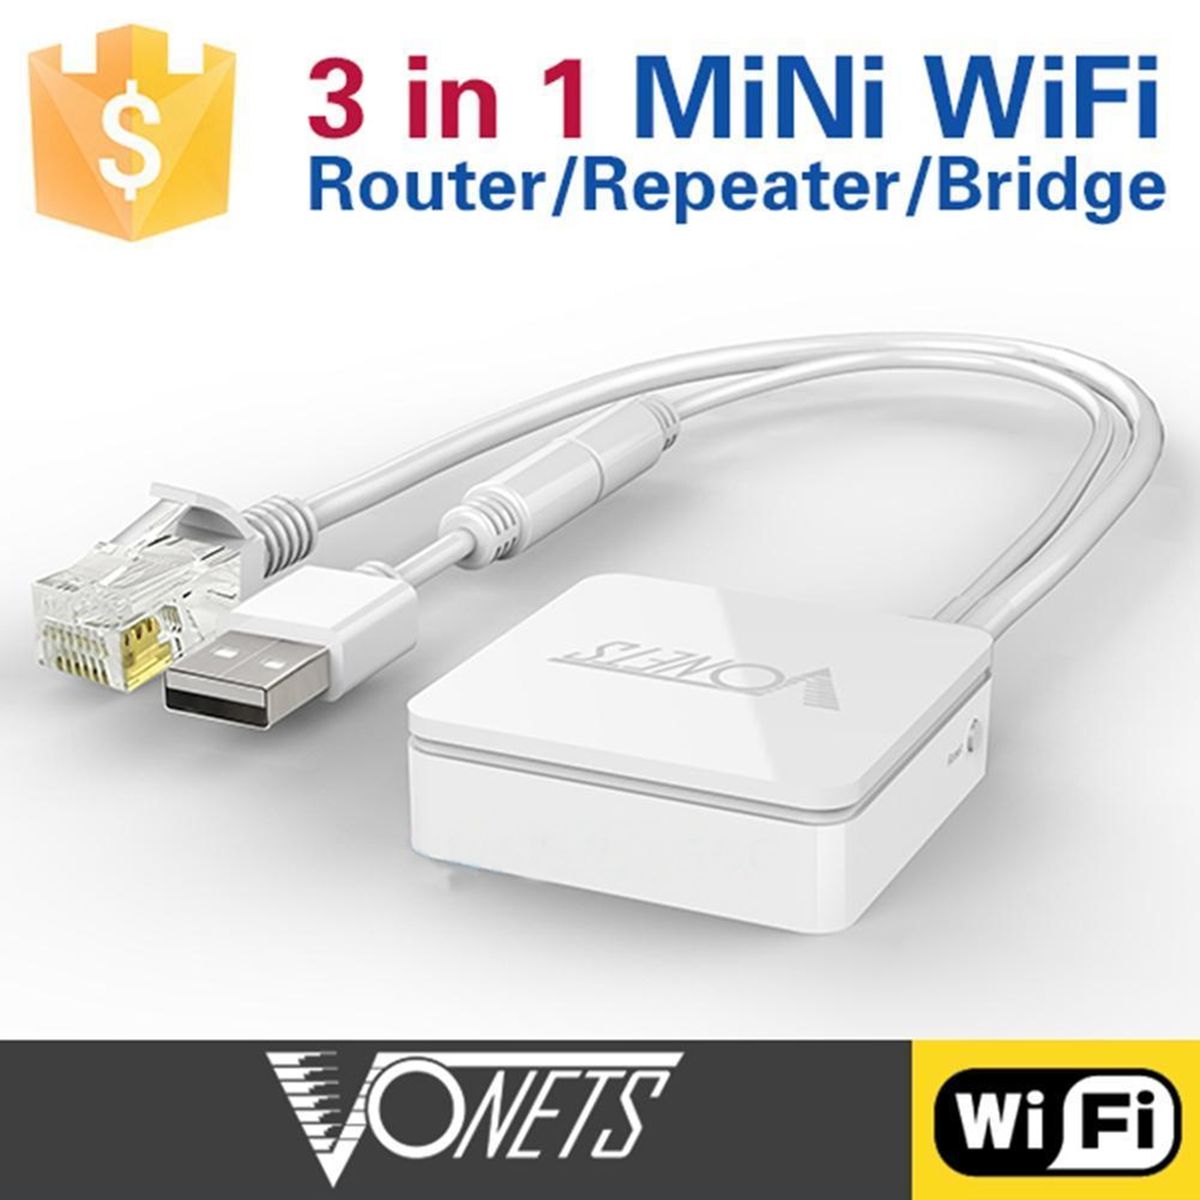 VONETS-VAR11N-300-3-in-1-300Mbps-Mini-Wireless-Repeater-Wifi-Bridge-AP-Extender-Amplifier-WiFi-Boost-1130492